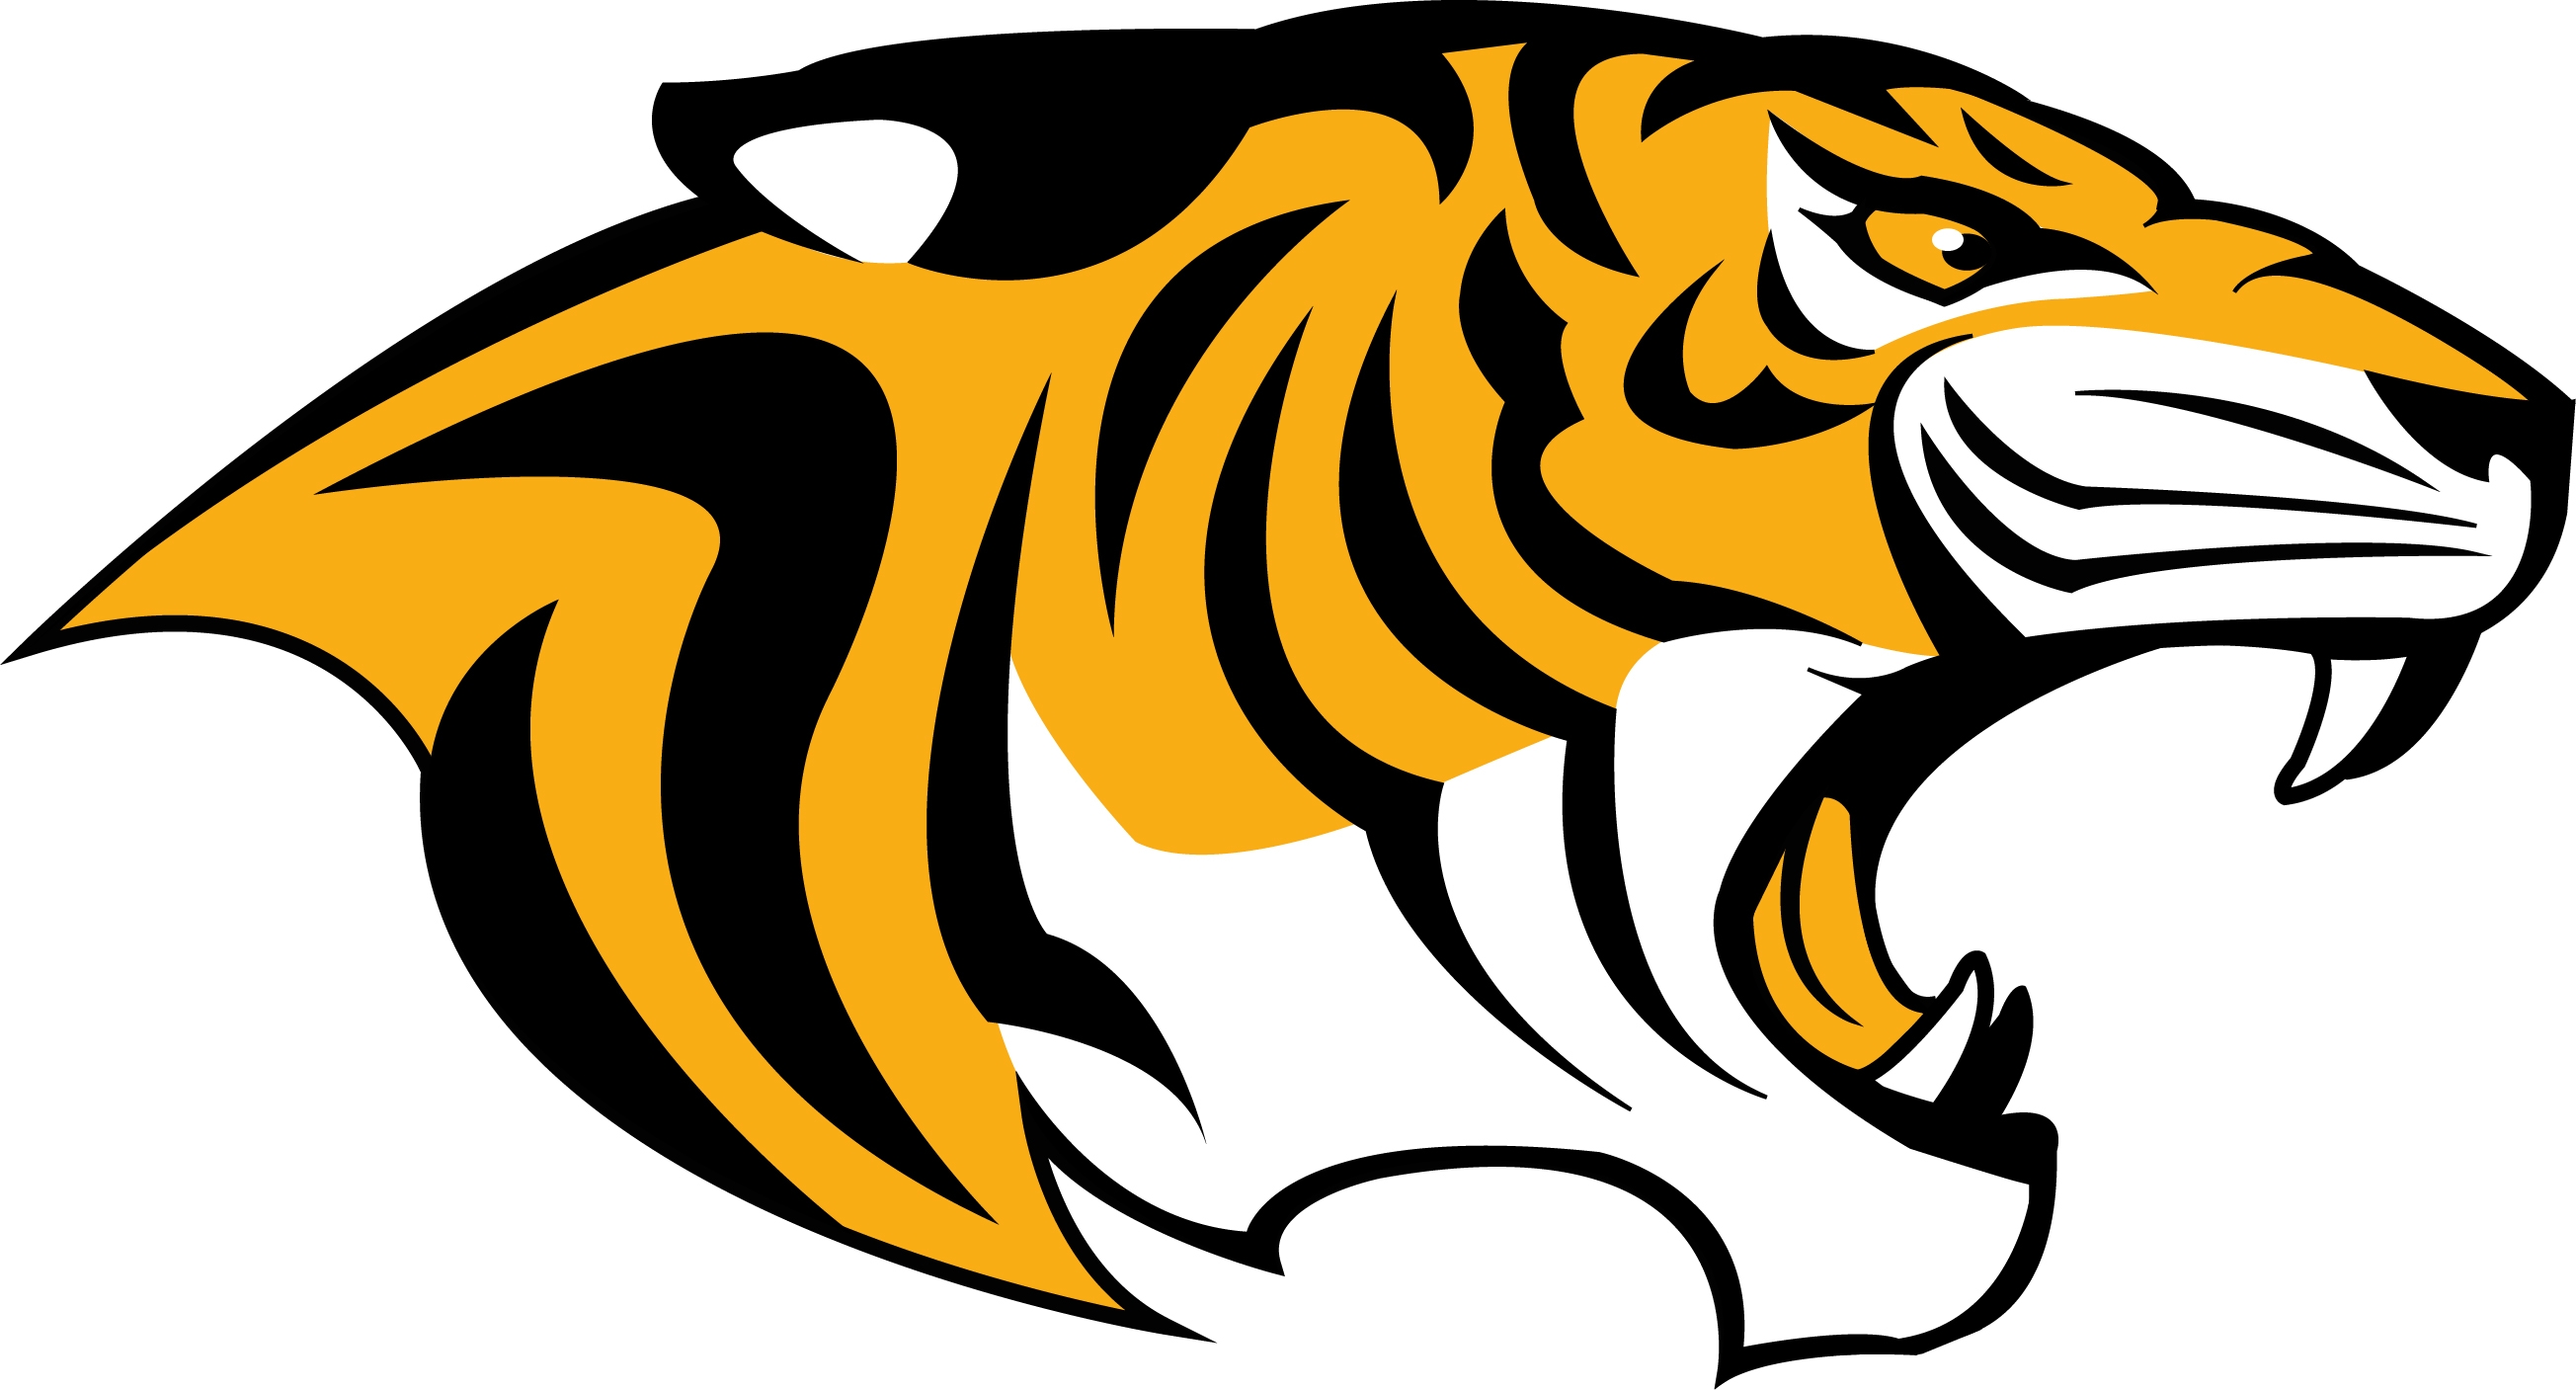 Tiger Logo - tiger png logo 10 free Cliparts | Download images on